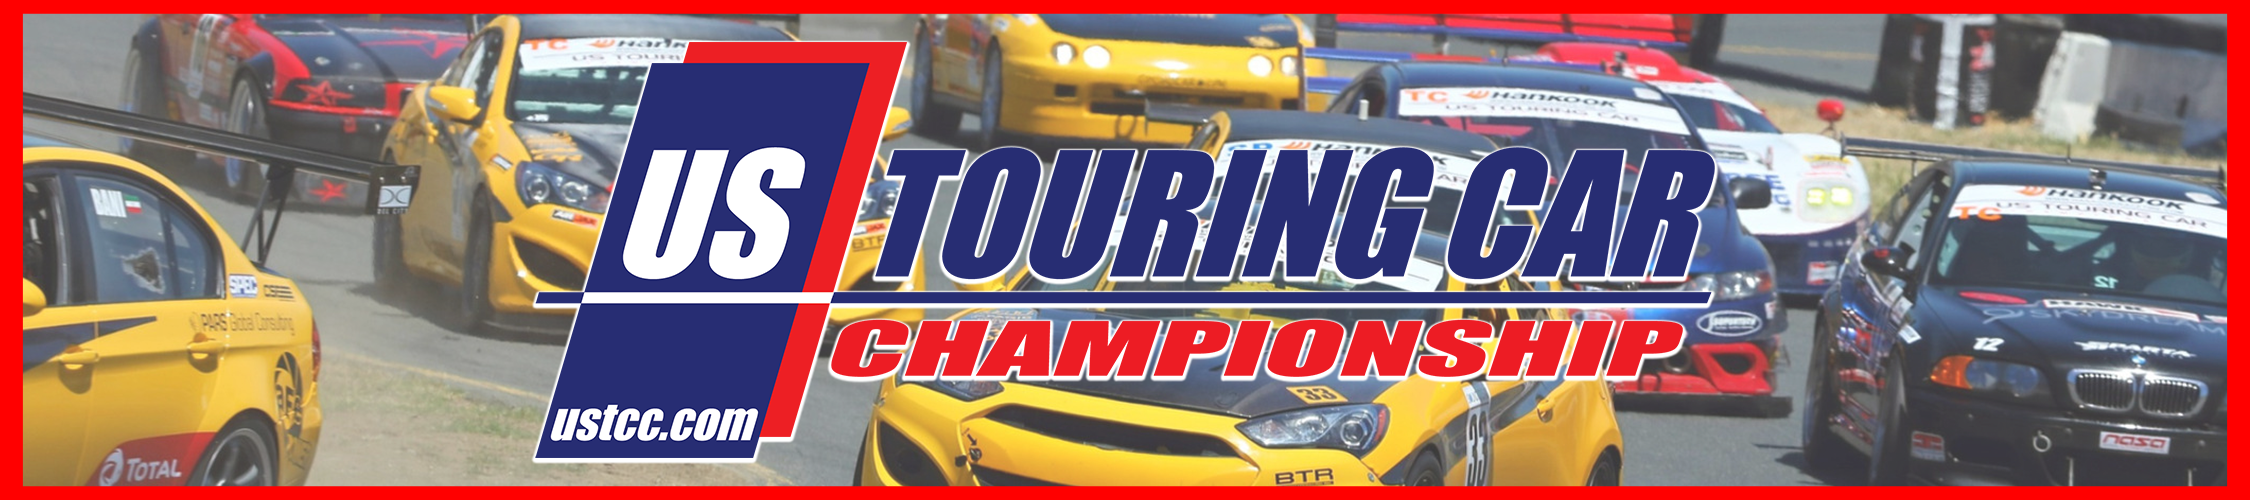 US Touring Car Championship Merch